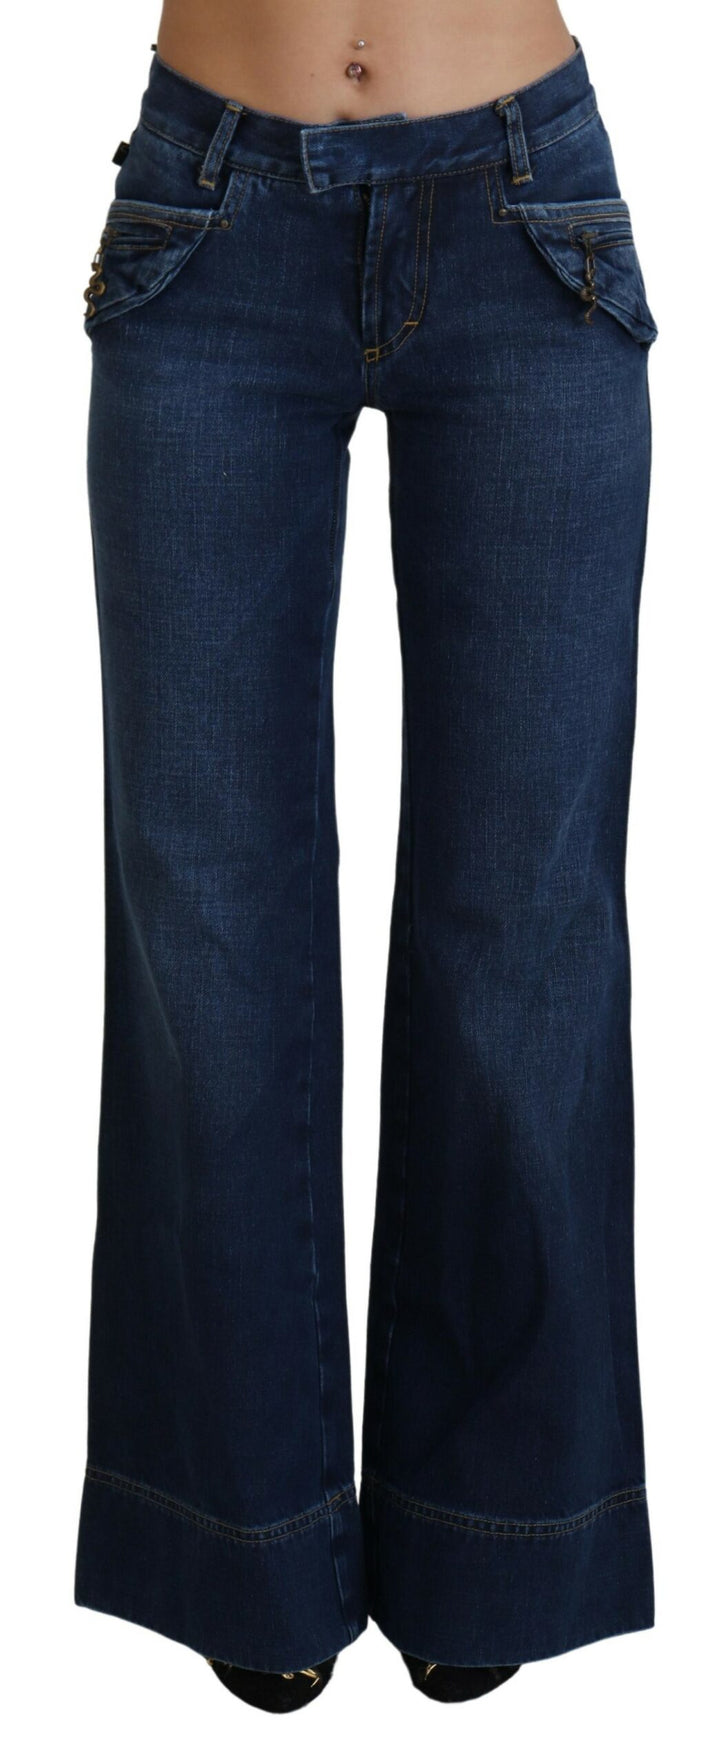 Just Cavalli Chic Flared Cotton Denim Jeans